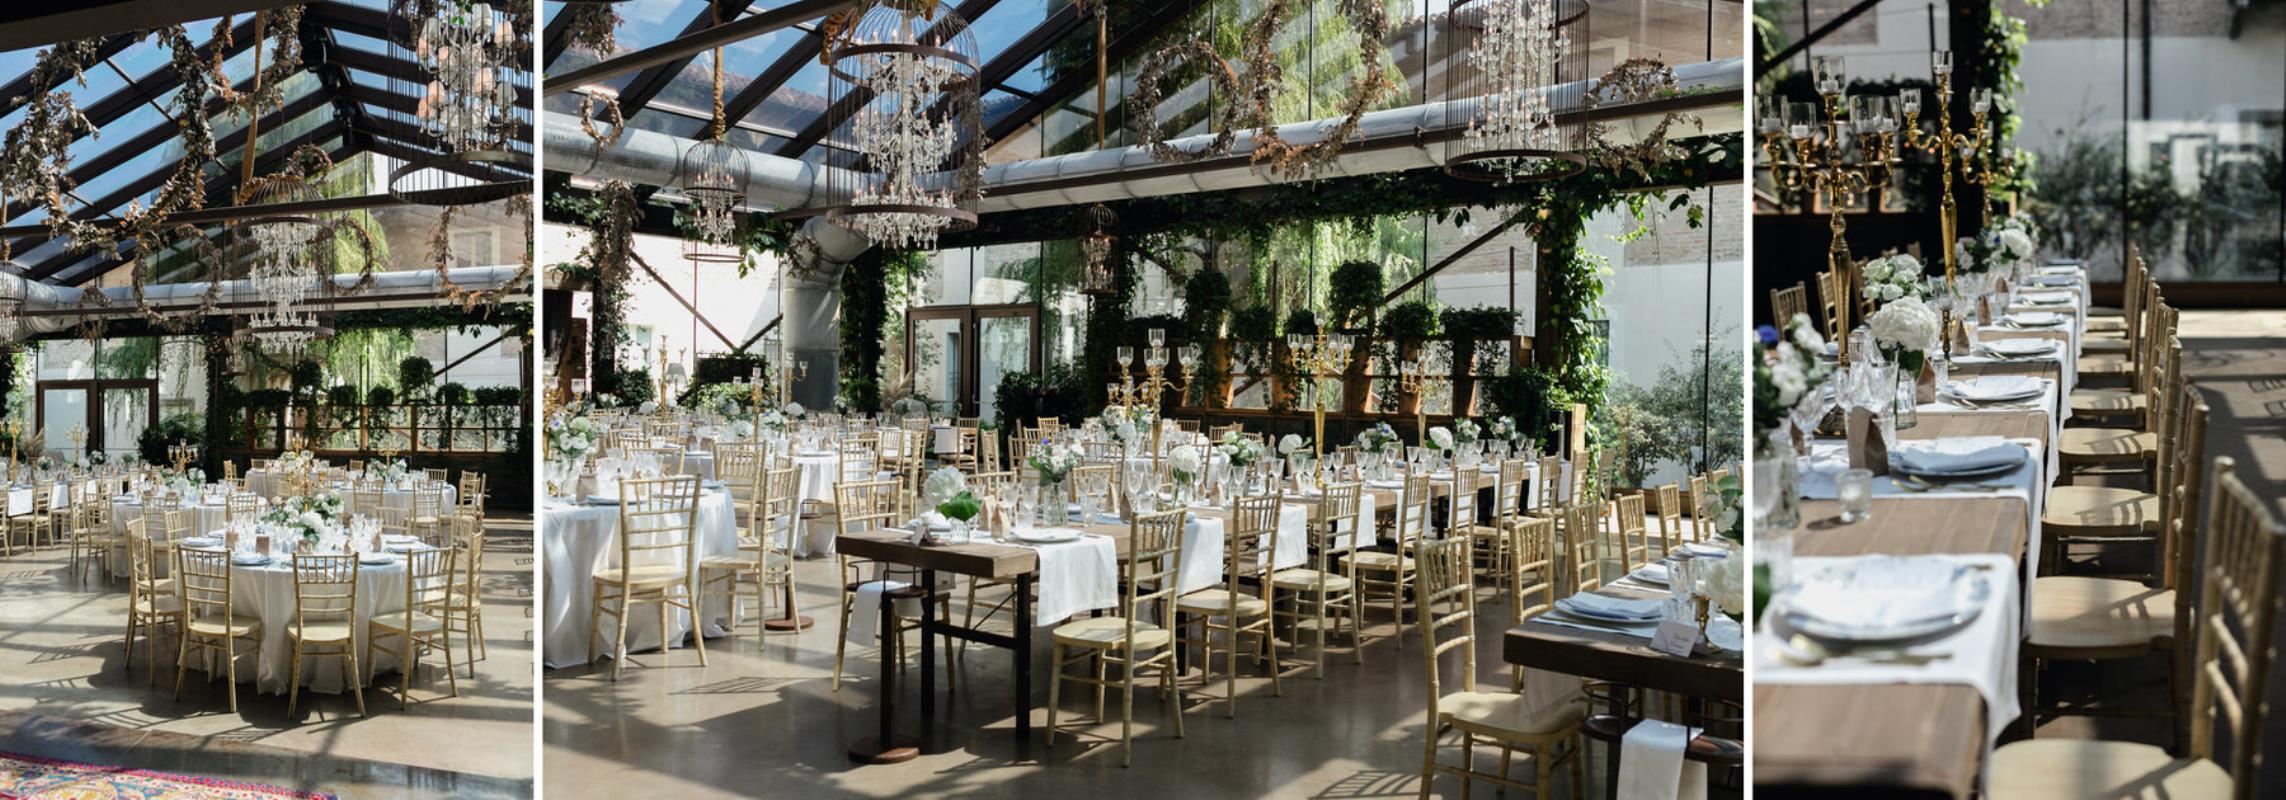 table setting wedding in italy | Laura Stramacchia | Wedding Photography